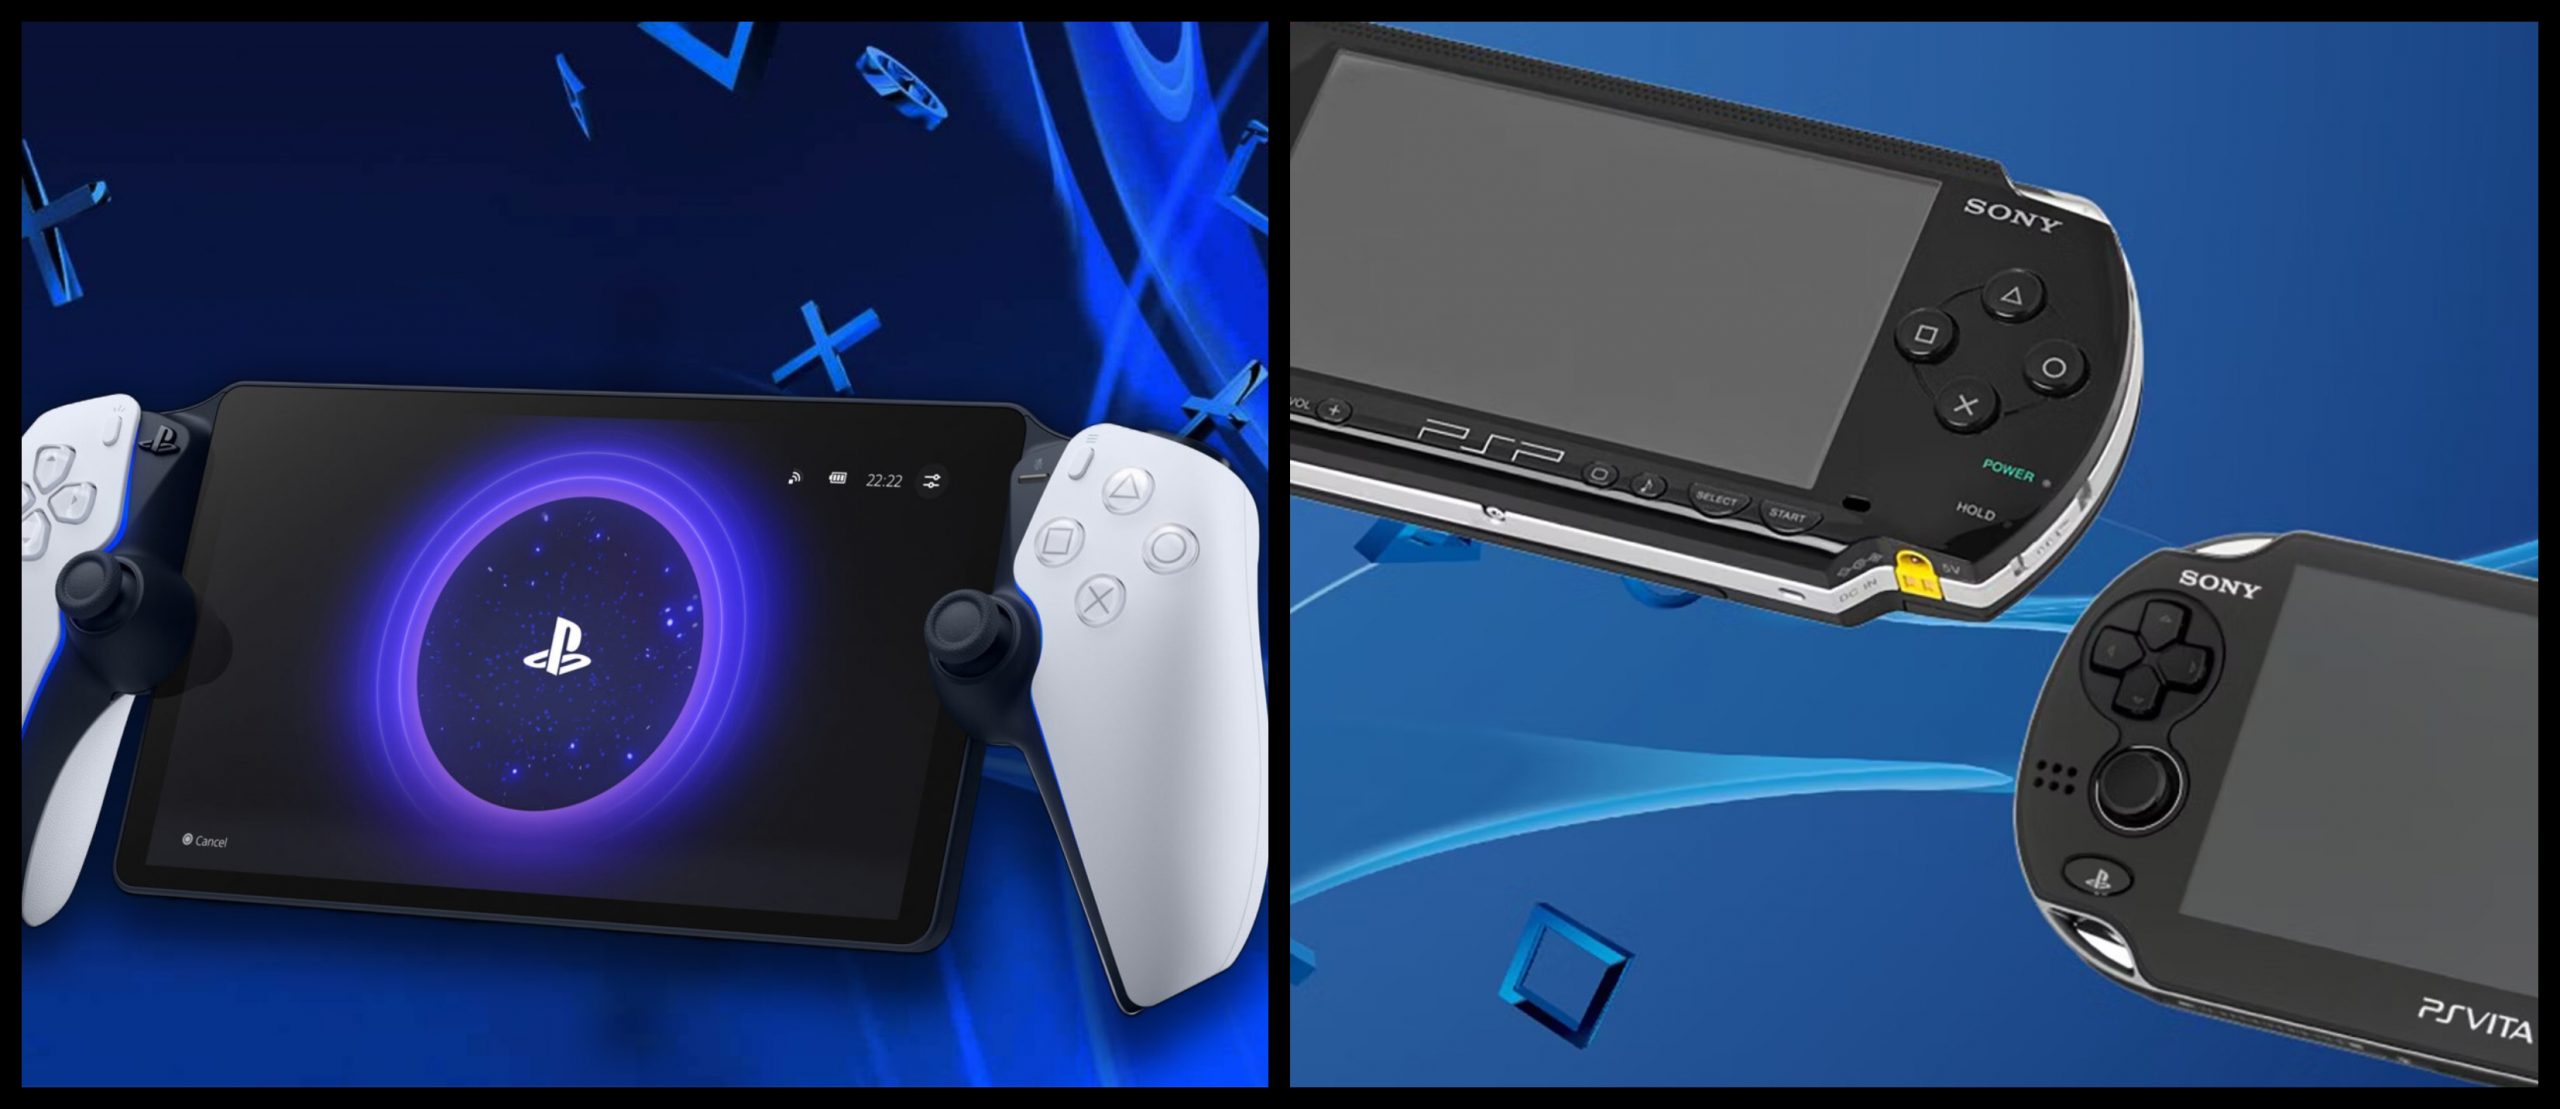 PlayStation Portal: Alternatives to Sony's £200 streaming handheld